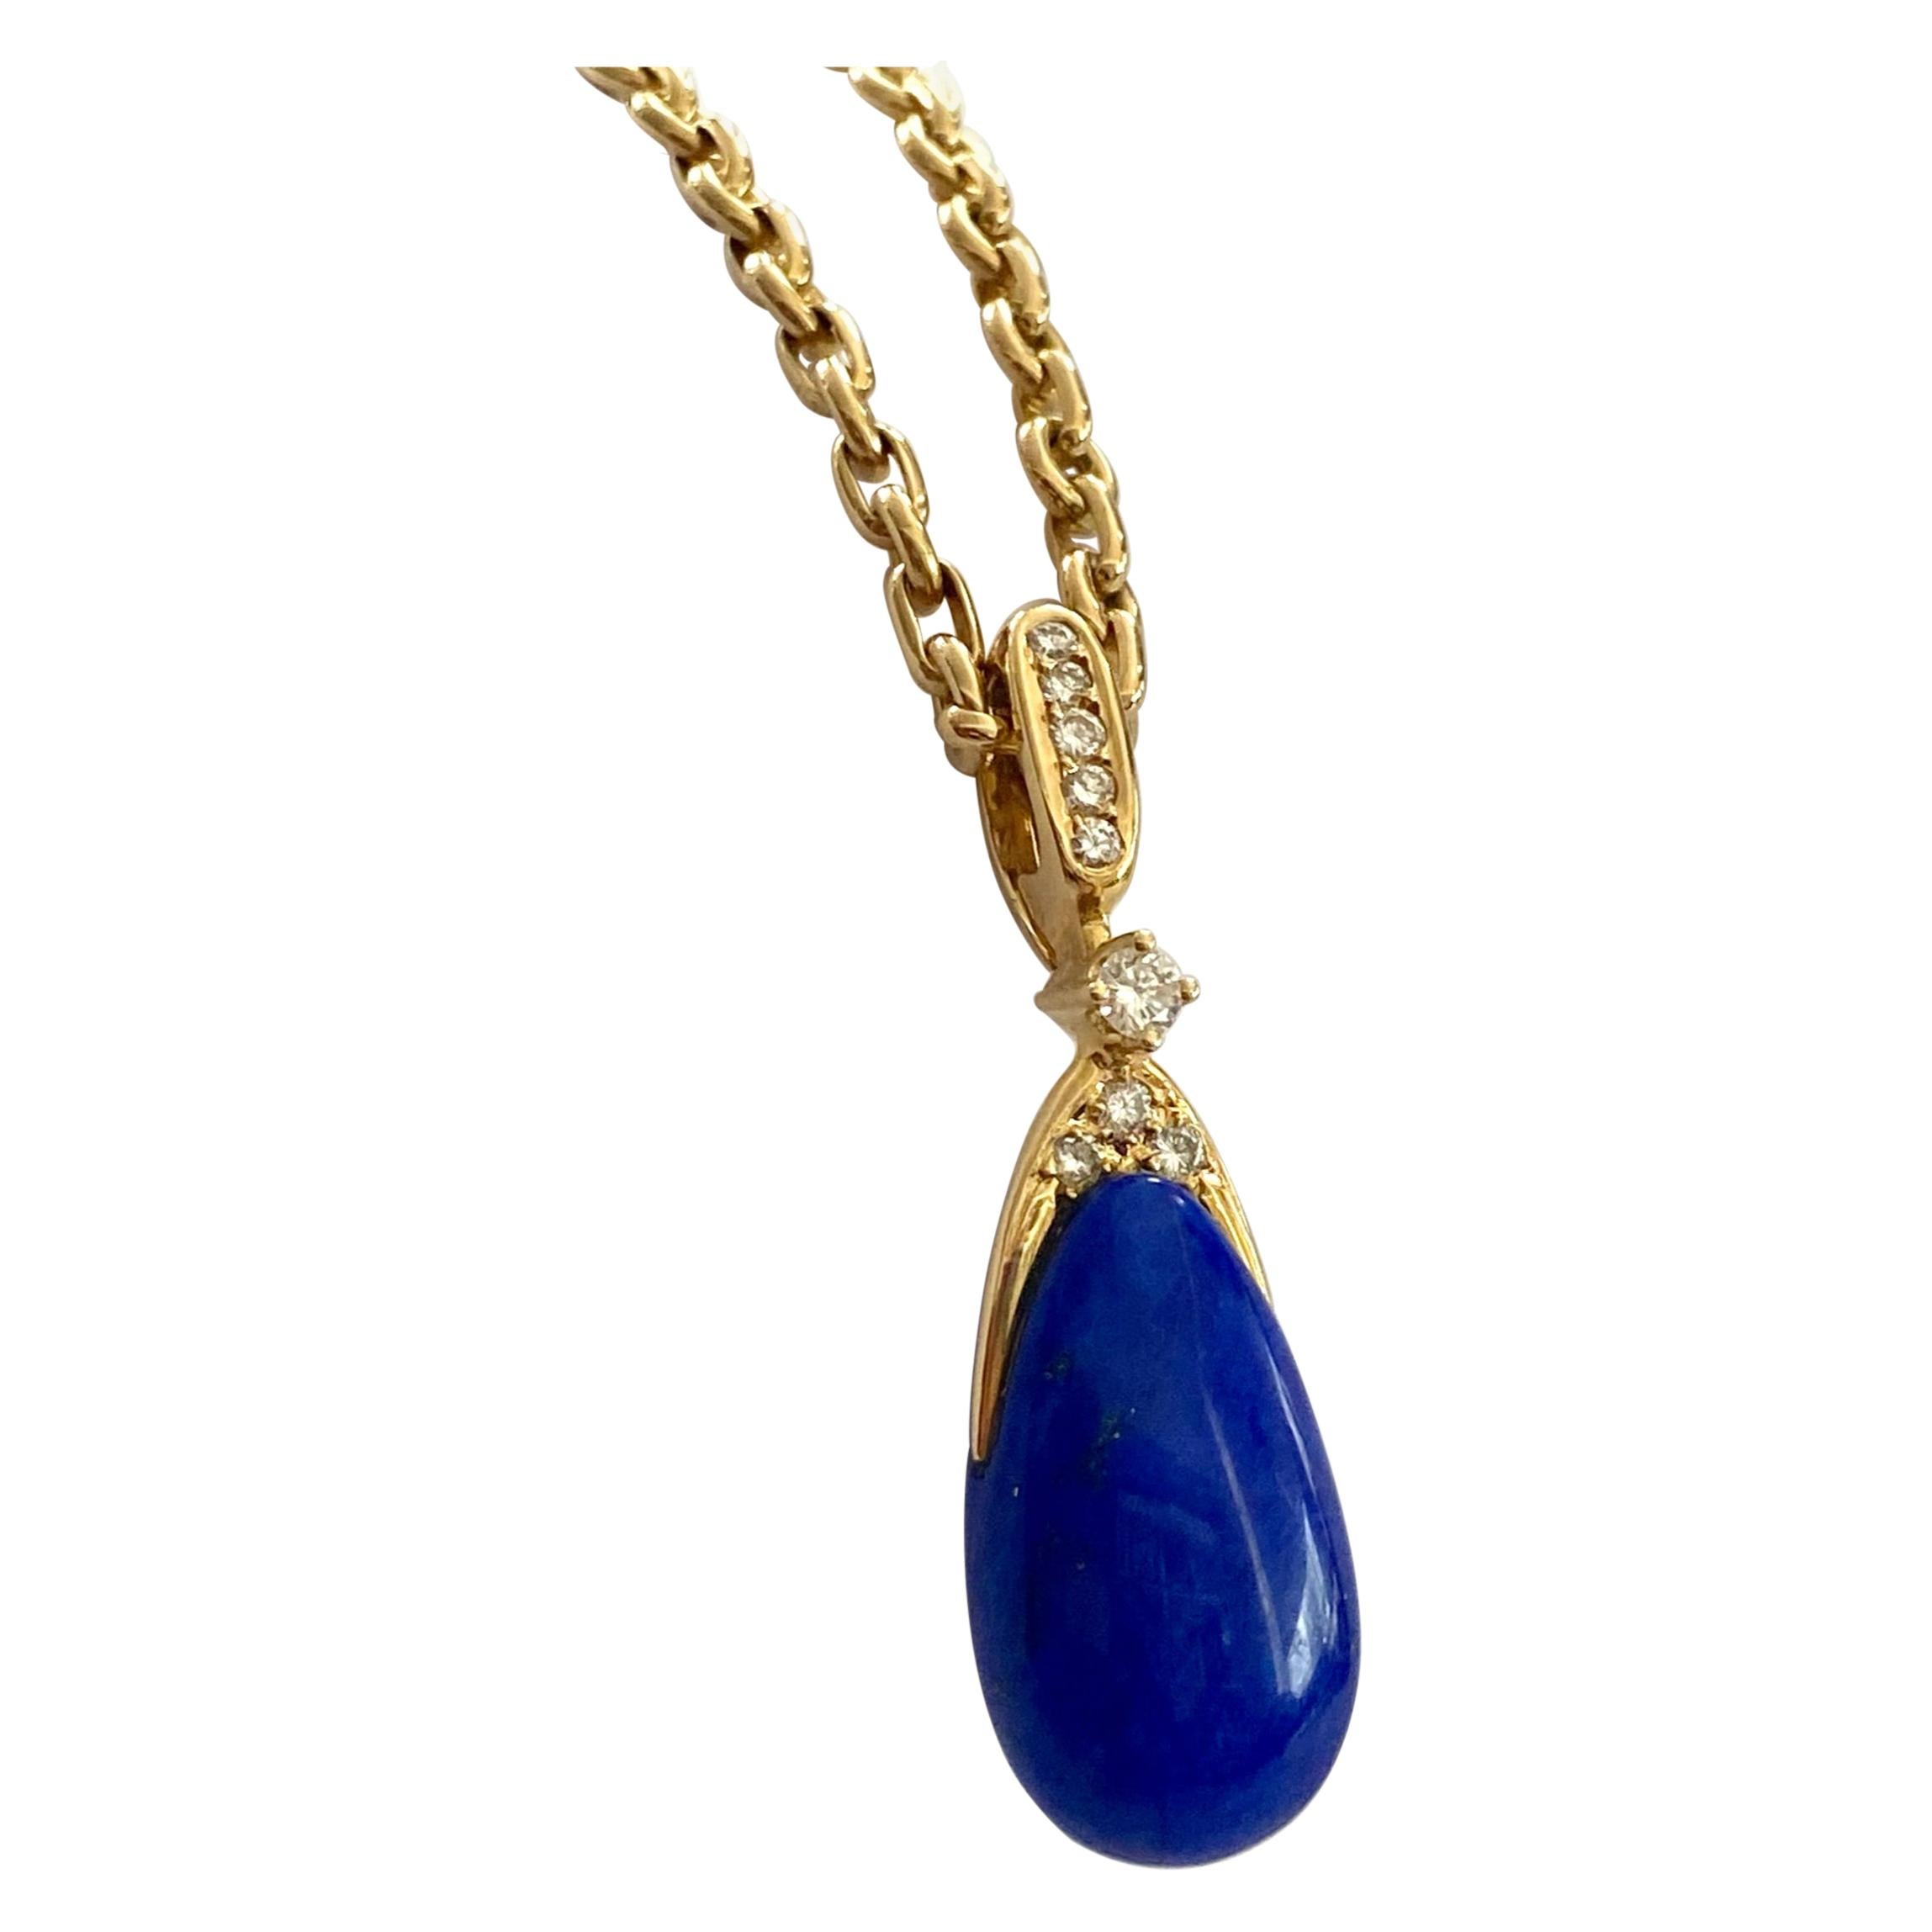 Chaumet Paris, Necklace with Pendant, Lapis Lazuli and 9 Diamonds